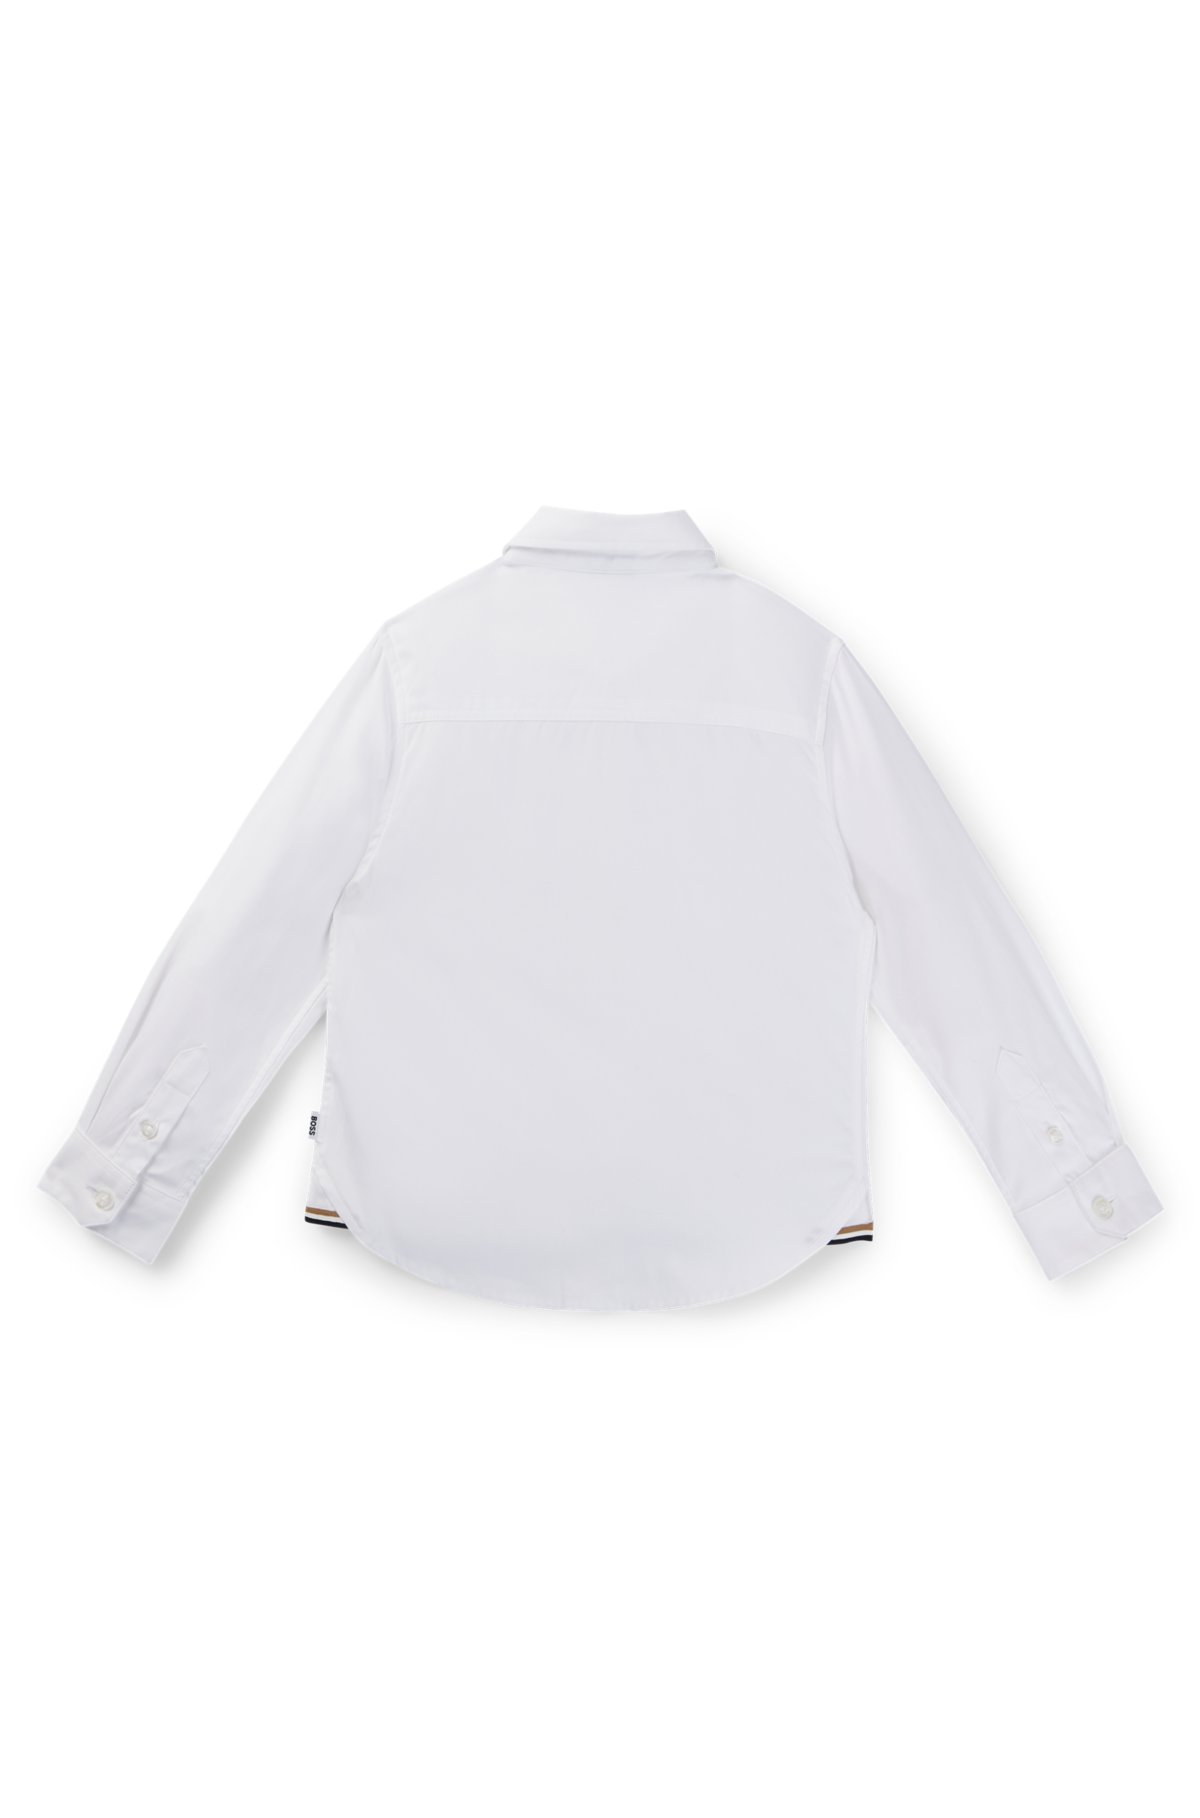 Kids' regular-fit shirt in Oxford cotton, White